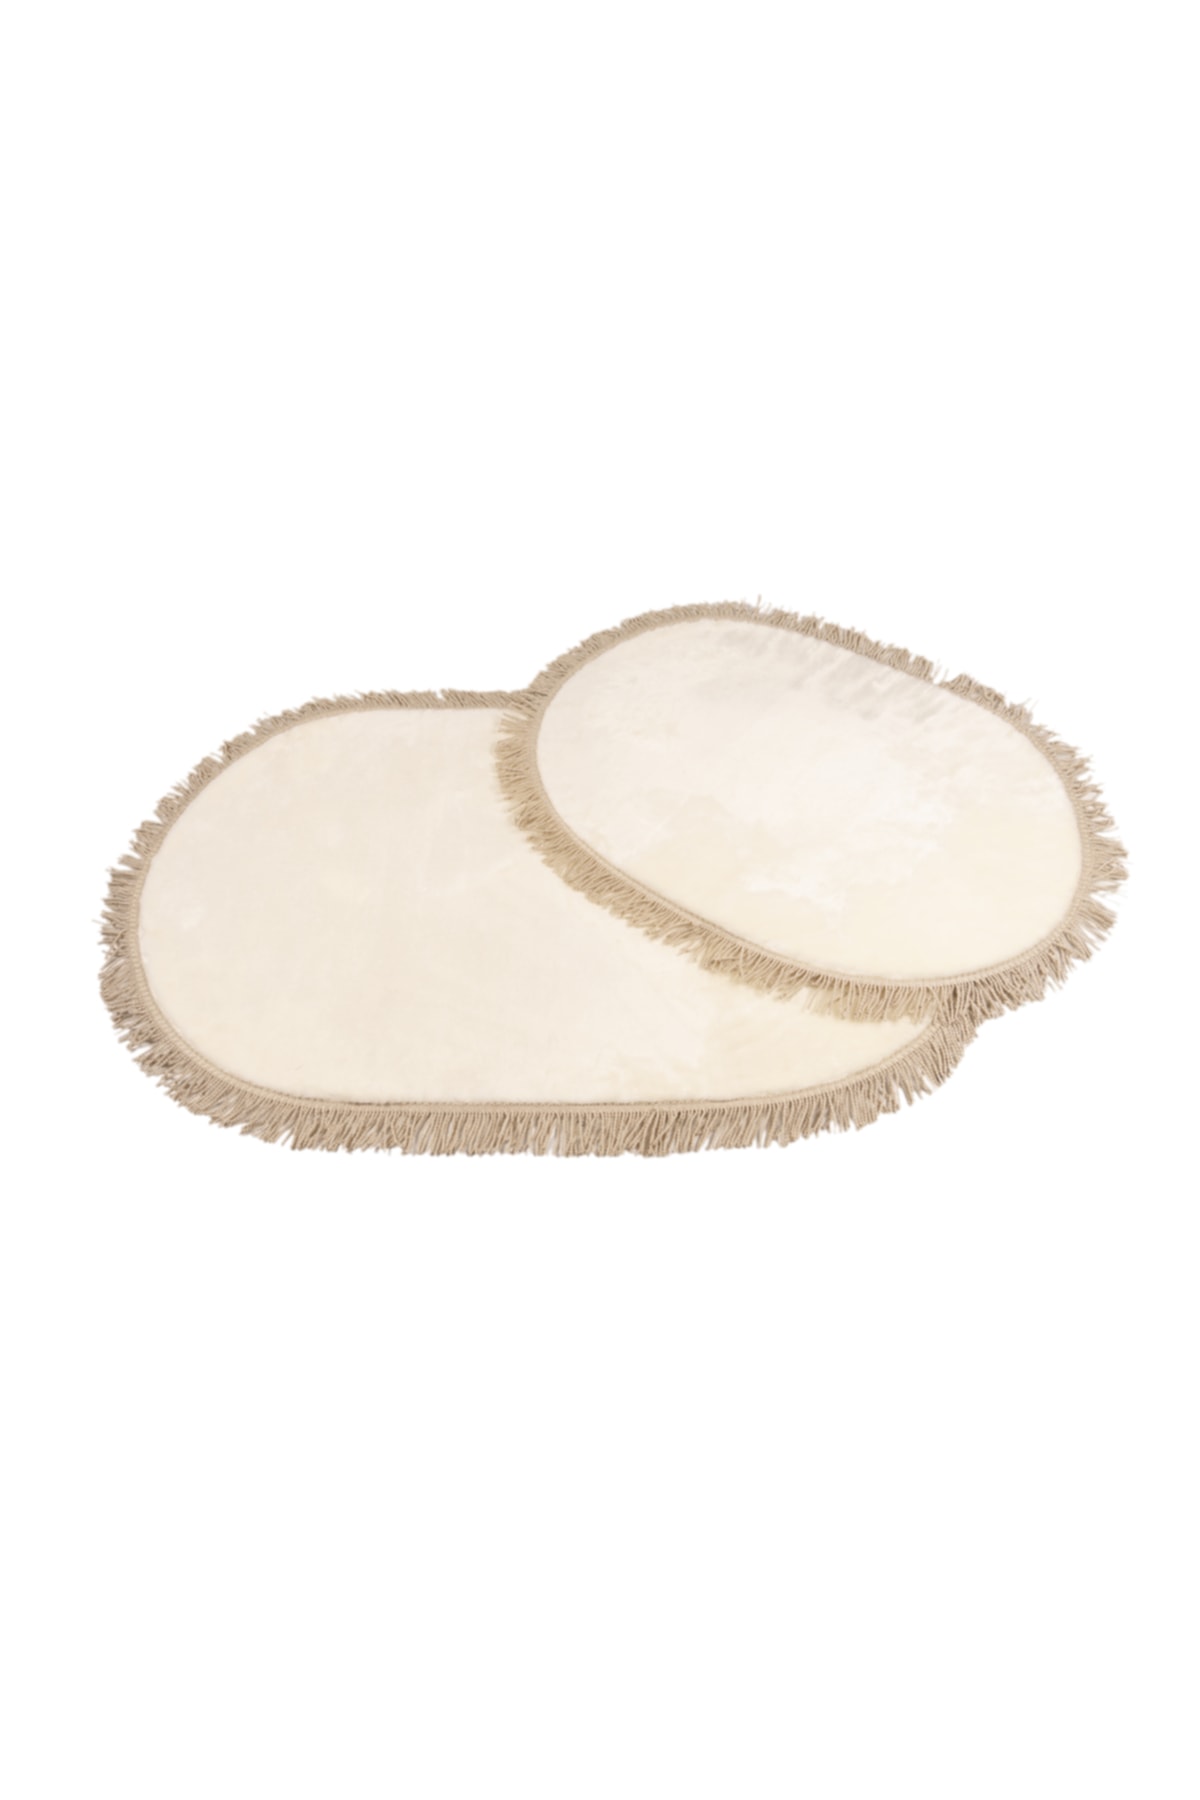 MK HOMETEKS Mk-hometeks Sade Oval Büyük Model Bej Püsküllü Beyaz 2’li Banyo Paspas Takımı